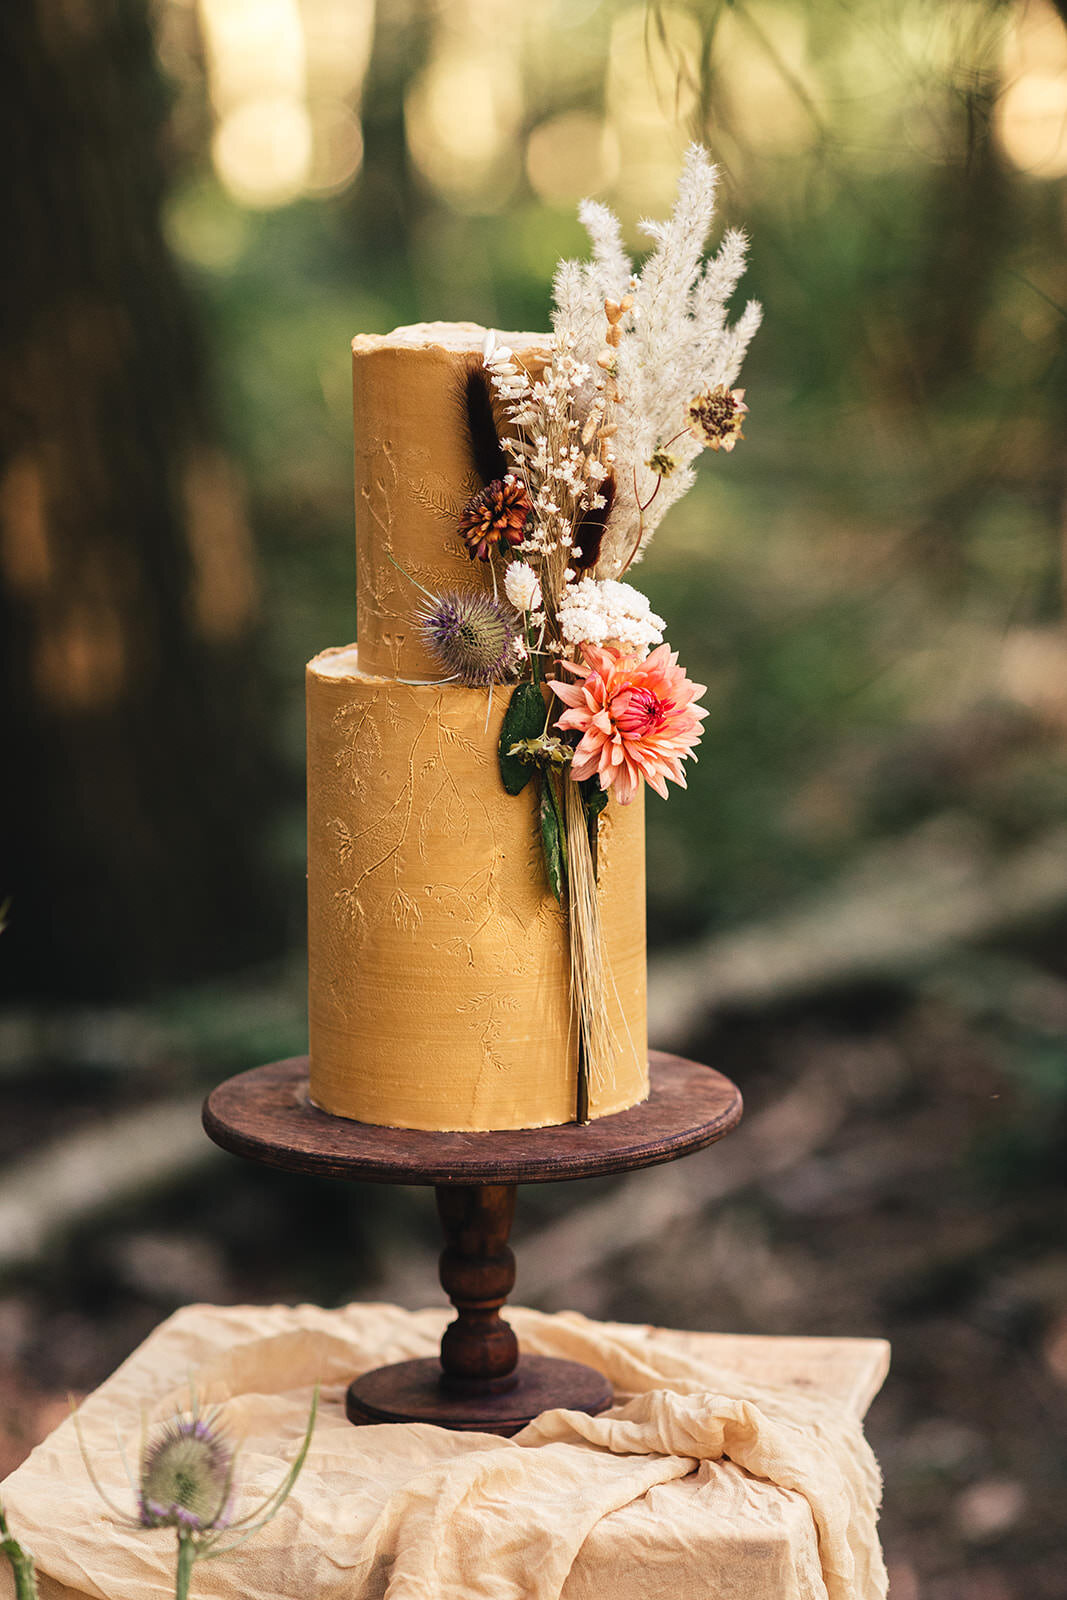 Wedding cakes with dried flowers inspiration — AVANT GARDE CAKE STUDIO